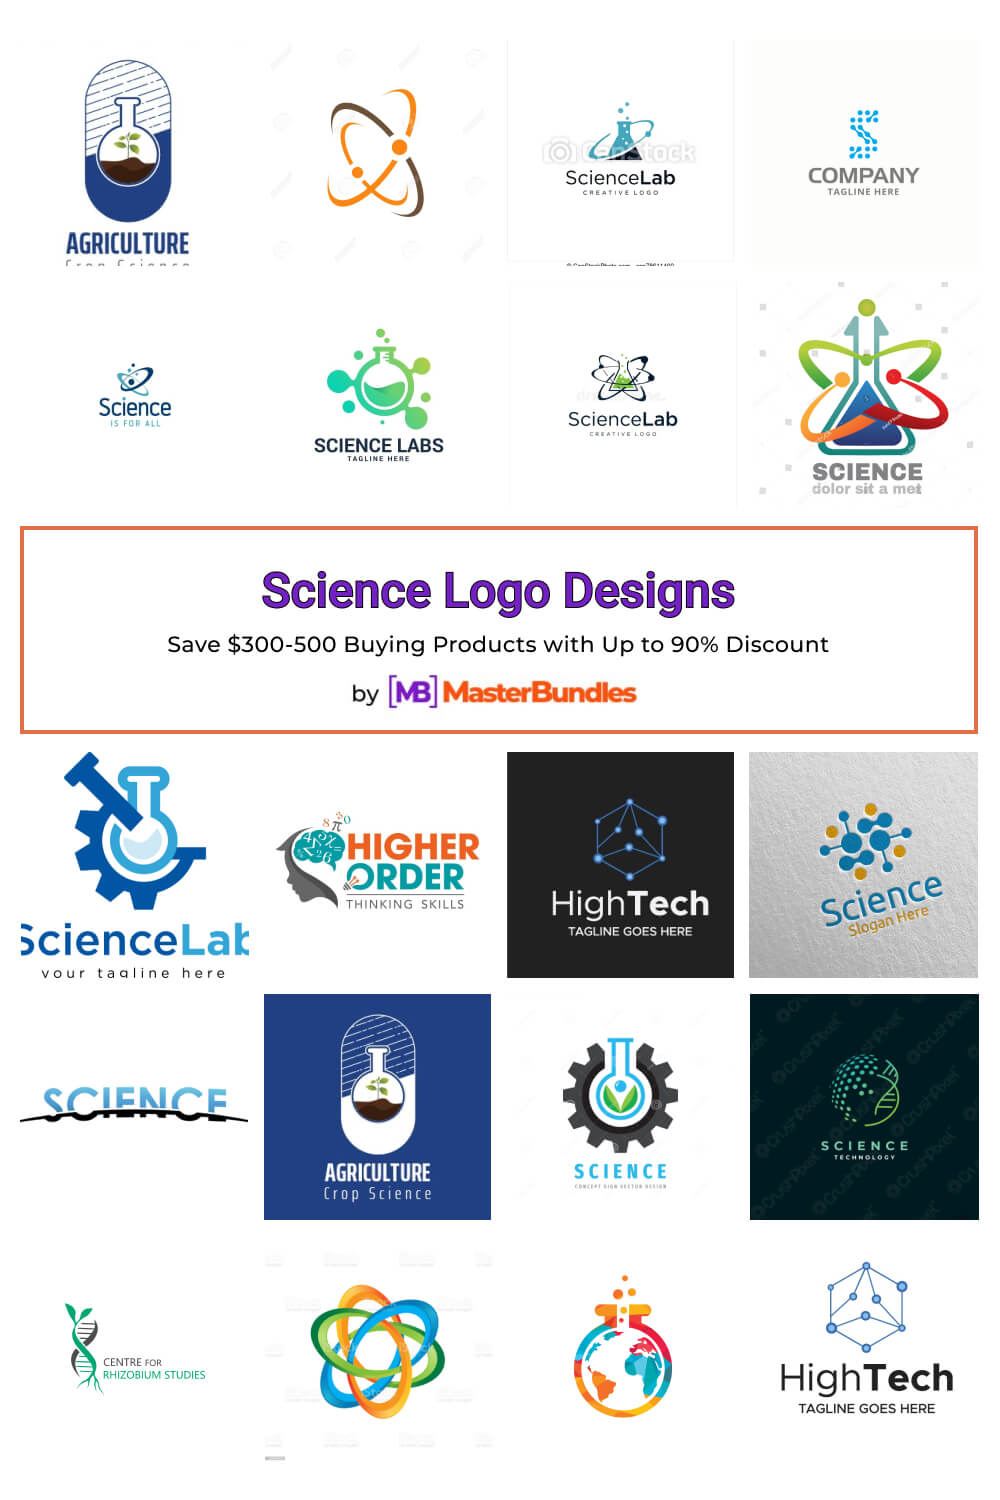 science logo designs pinterest image.